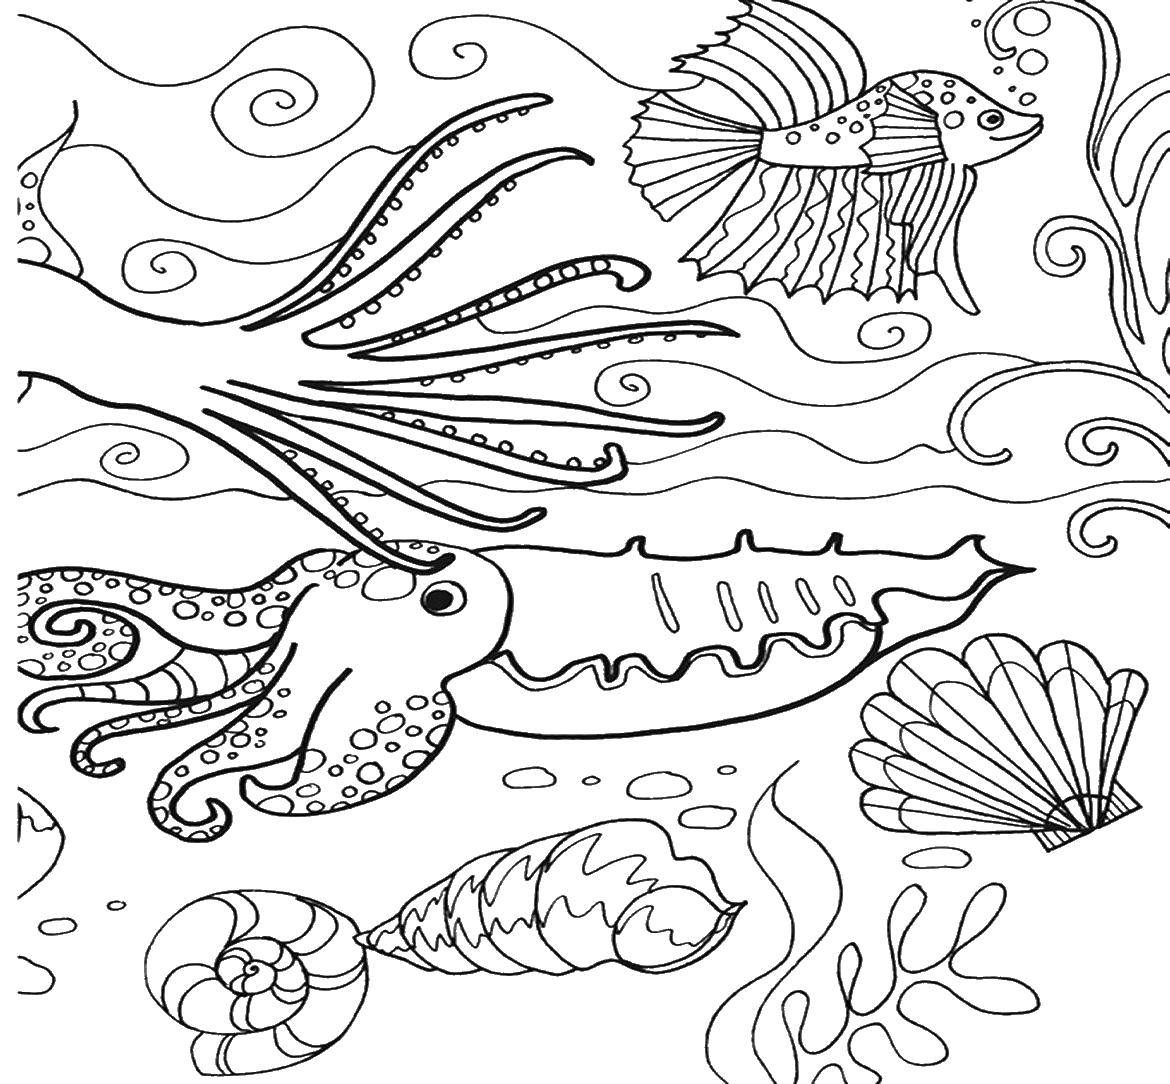 Название: Раскраска Морские жители. Категория: морское. Теги: рыбка, море, медуза, кит, осьминог.